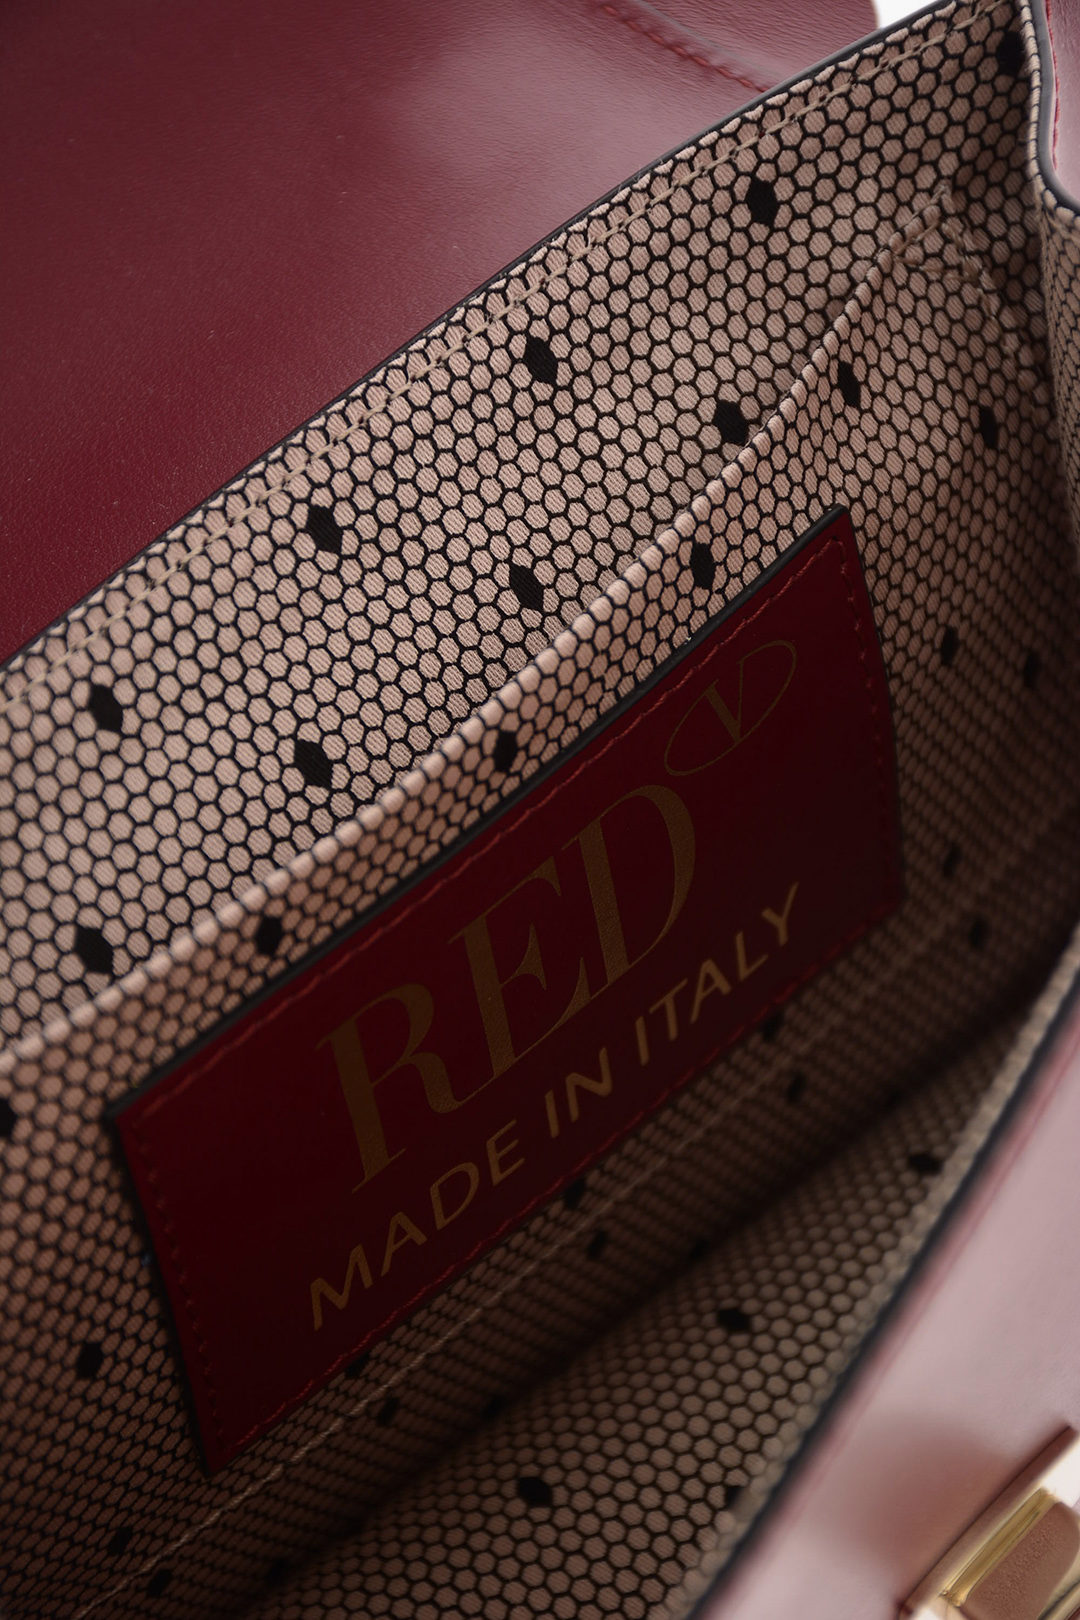 RED Valentino Rock Ruffles XL Shoulder Bag - ShopStyle